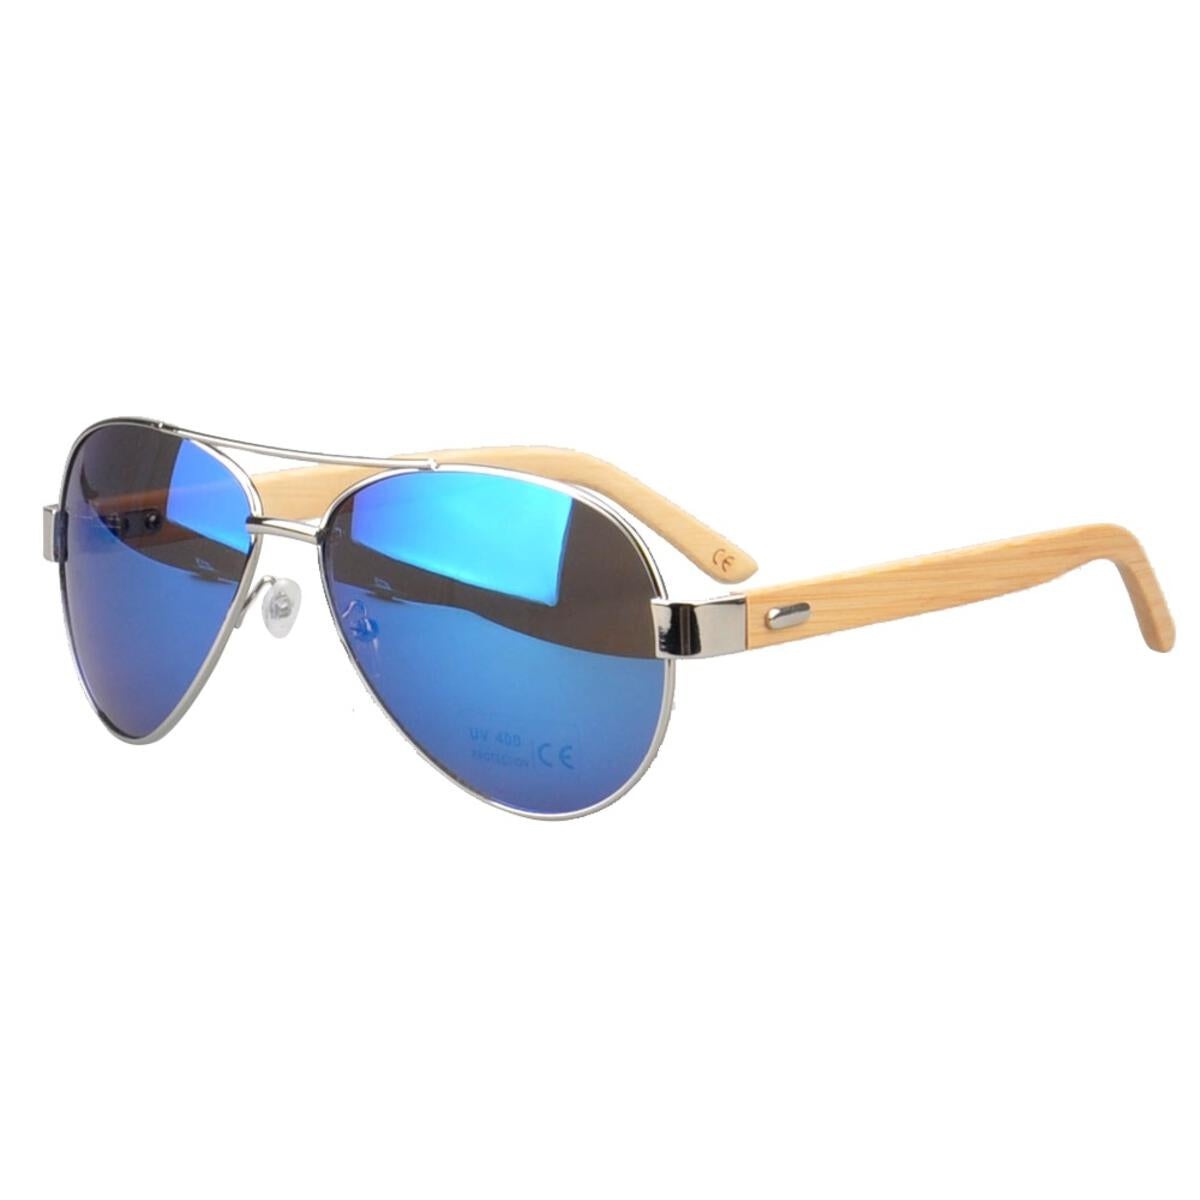 Kuma Sunglasses Jacaranda Sunglasses Kuma Sunglasses Mirrored Blue  